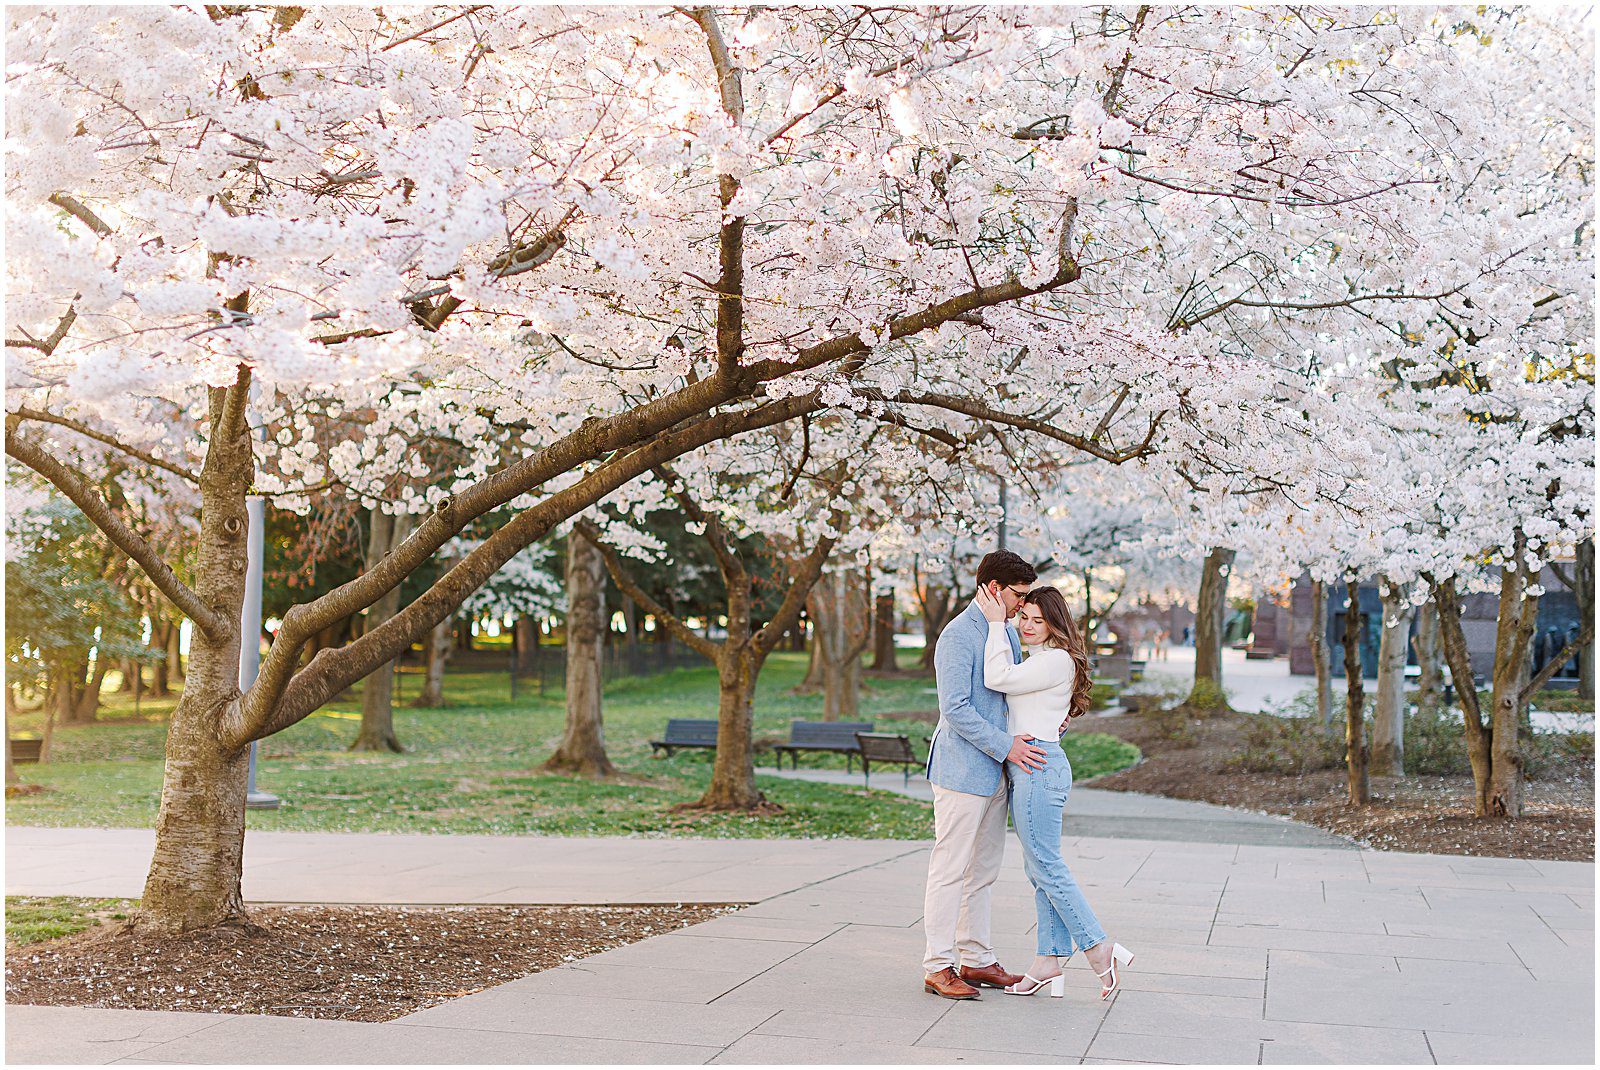 DC / cherry blossom /engagement session / wedding photographer/ Rebecca Dotson Photography